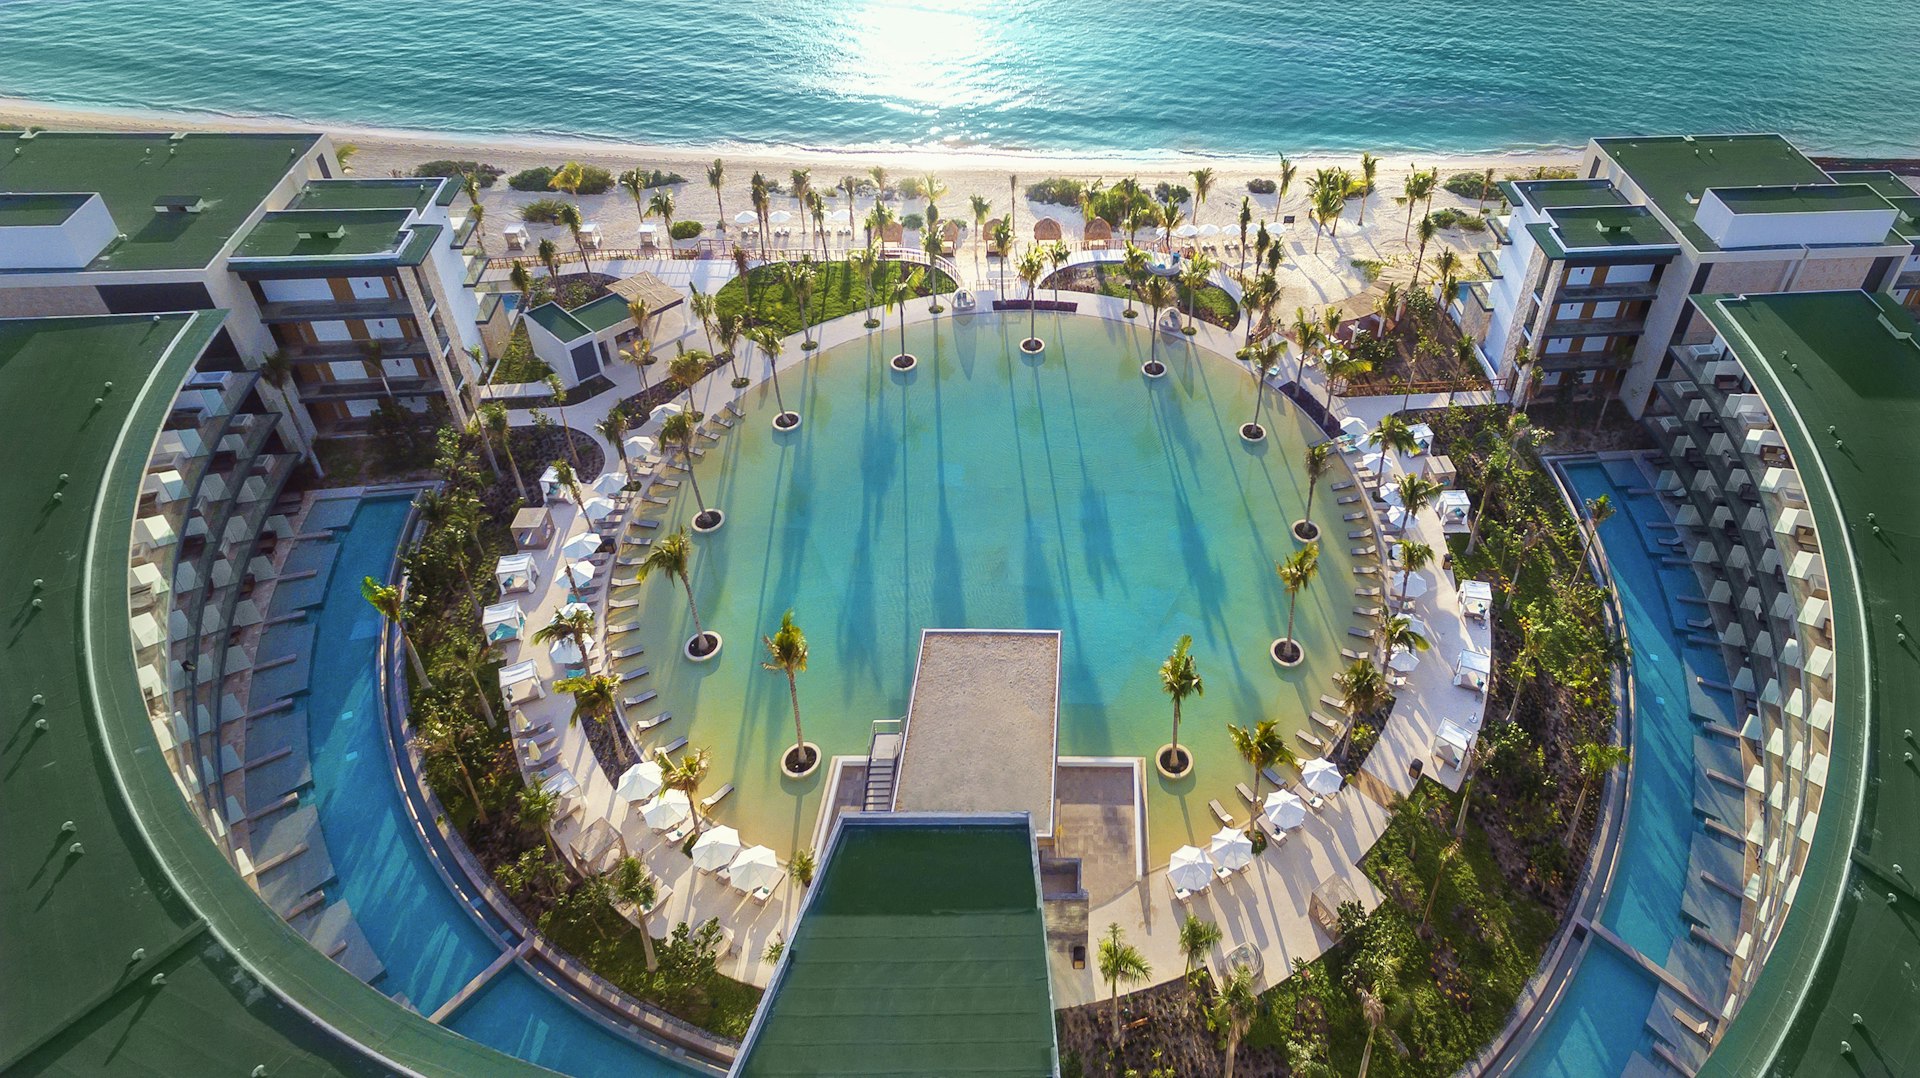 Swimming pool at the Havens Riviera Cancun resort & spa